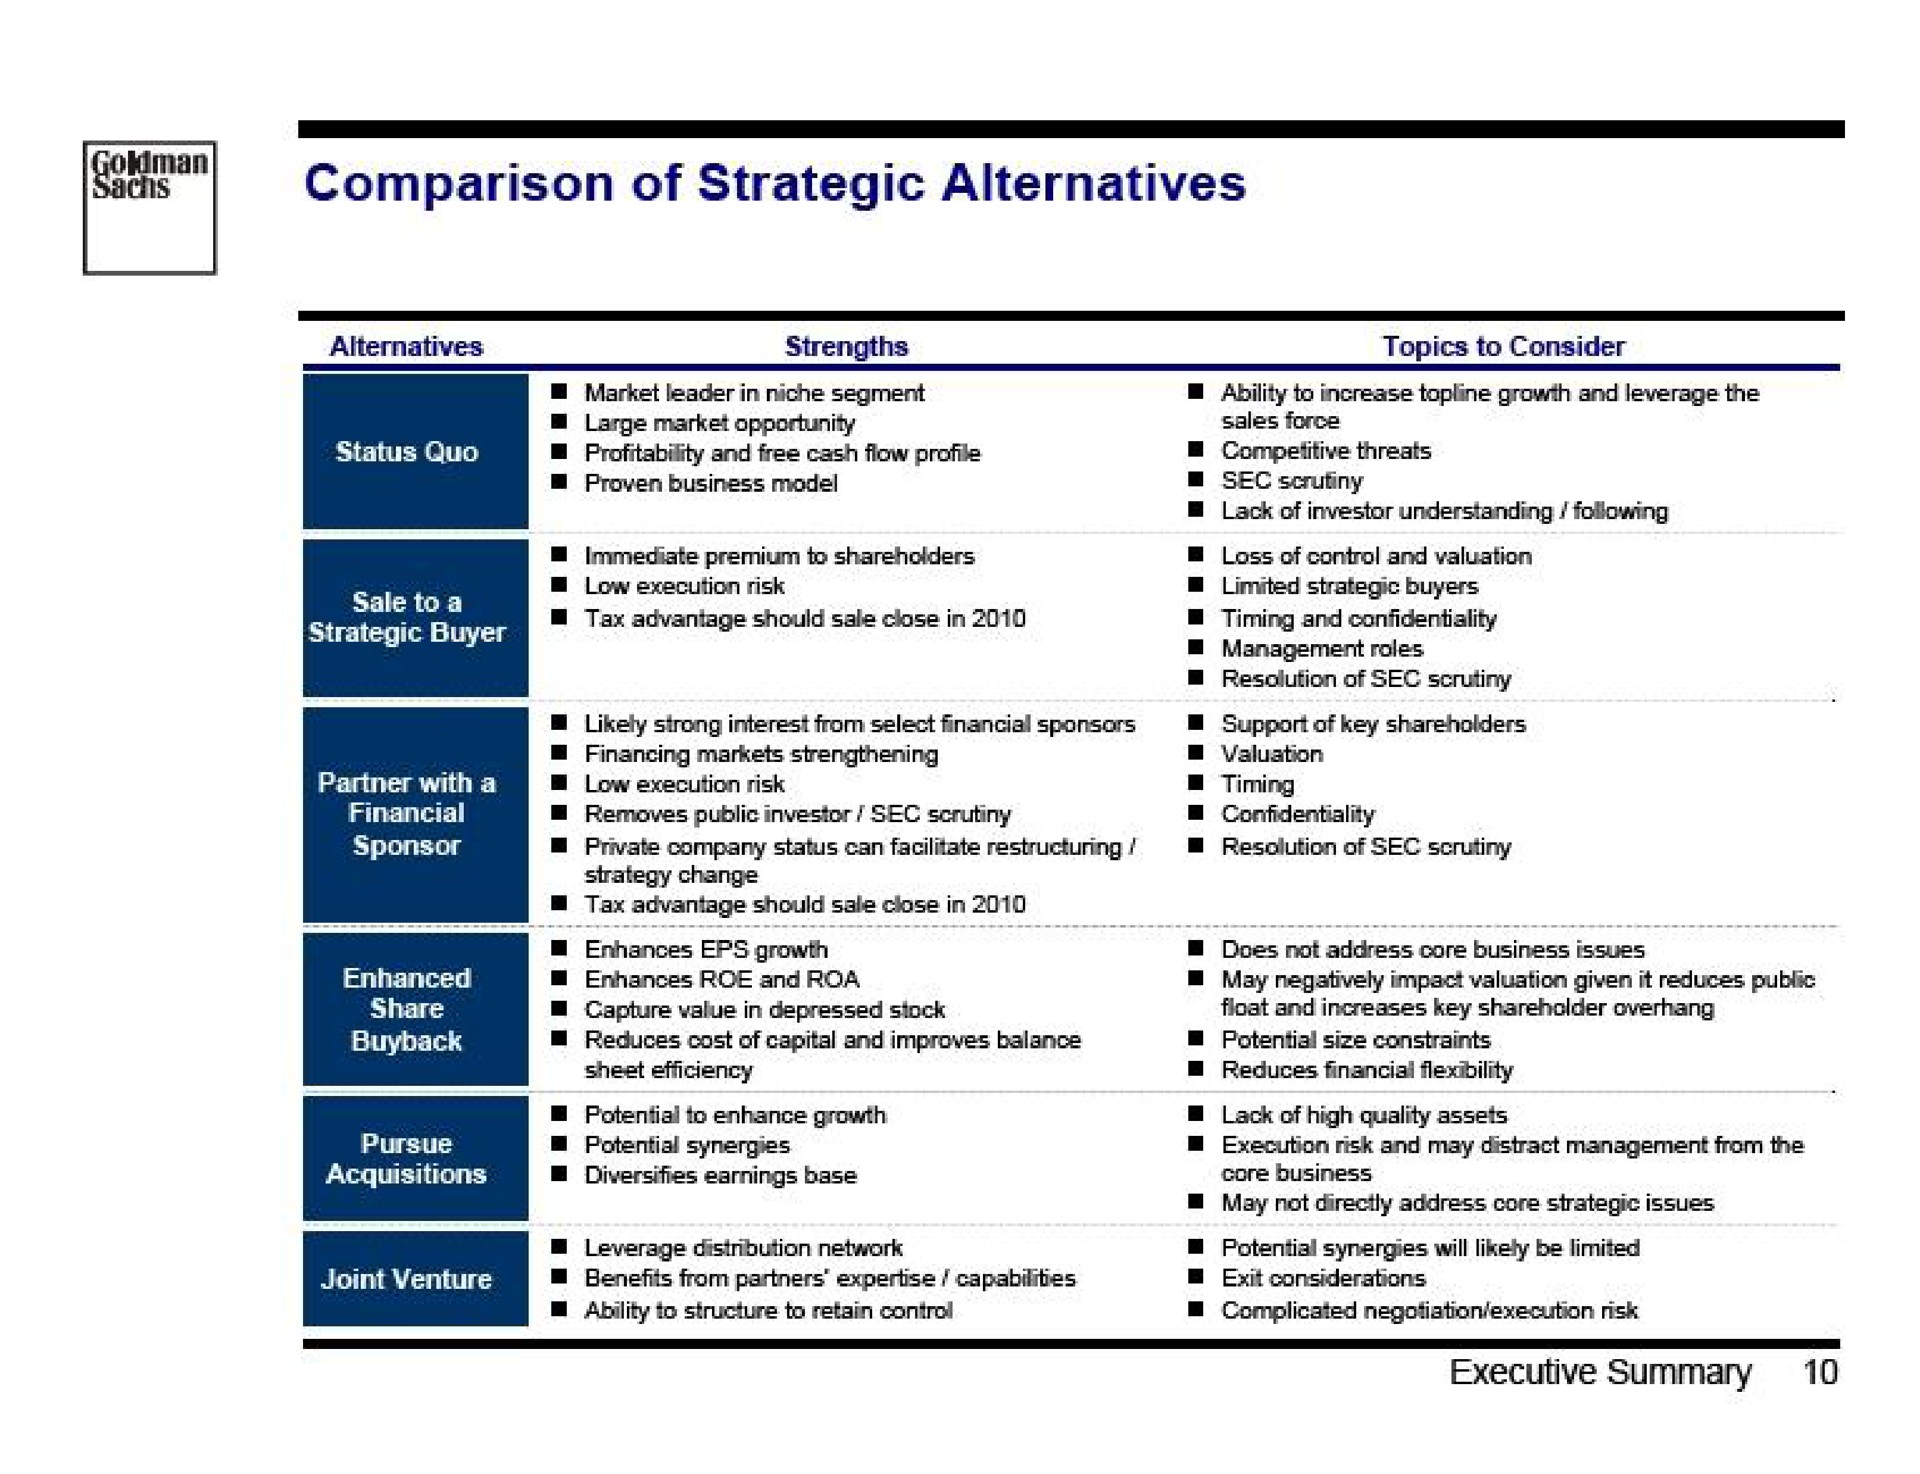 comparison of strategic alternatives | Goldman Sachs